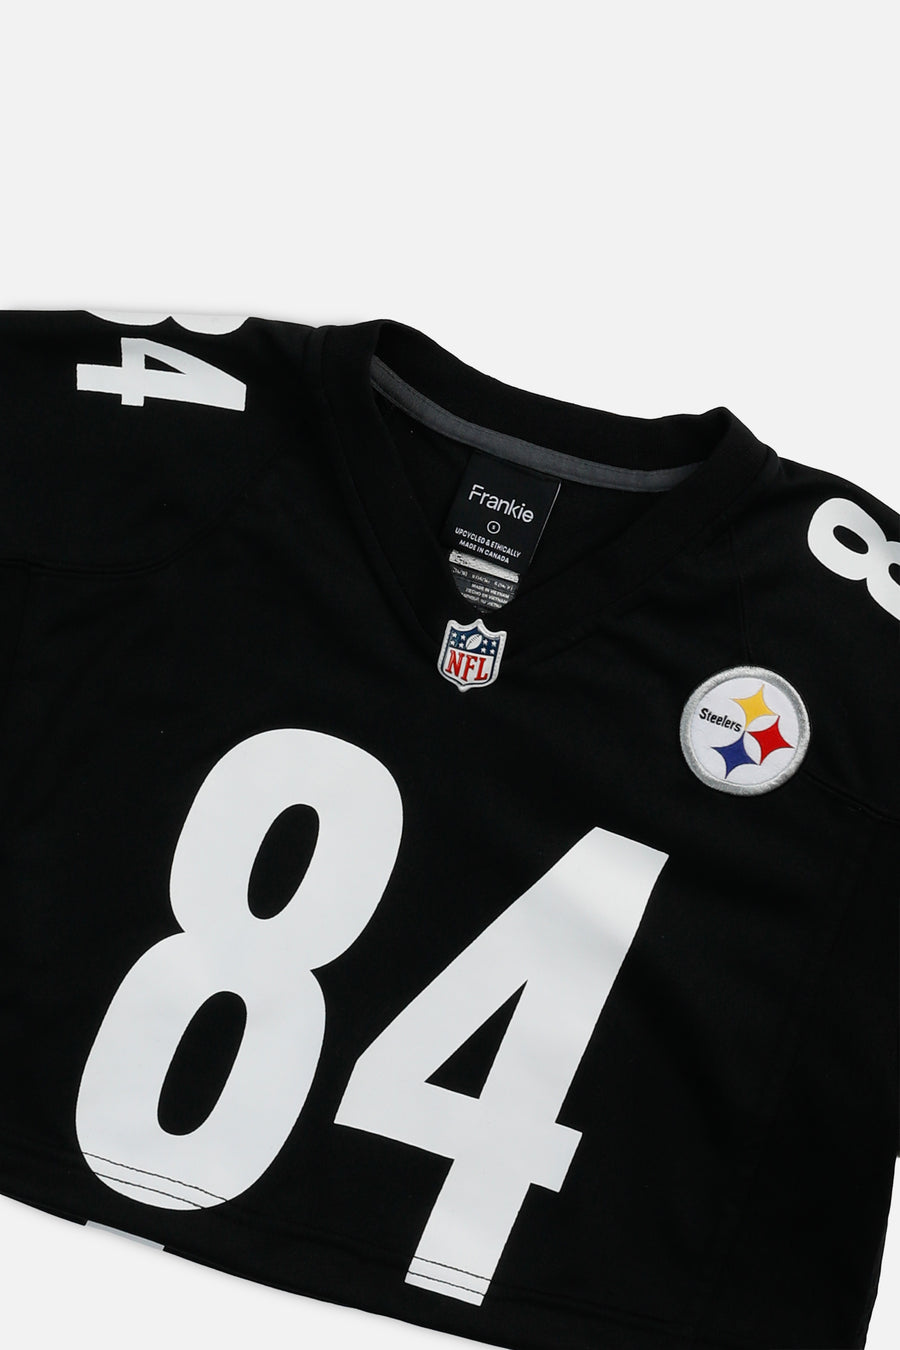 Rework Crop Pittsburgh Steelers NFL Jersey - S